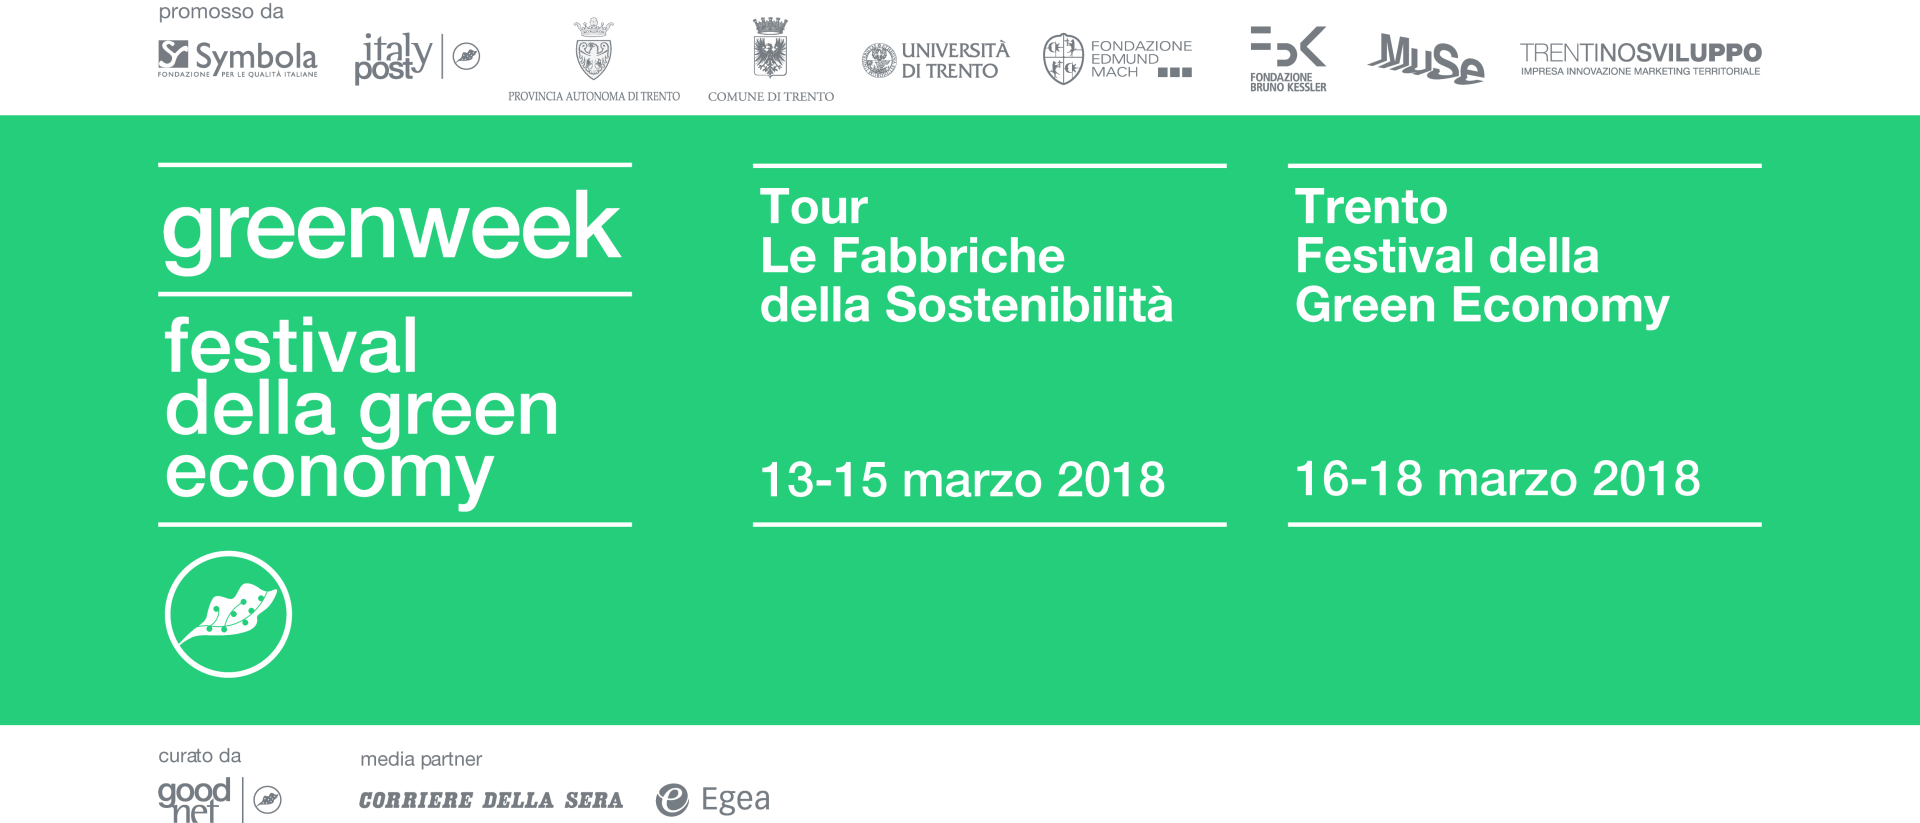 green week 2018 festival green sostenibilitù trento muse aziende creativity stories & news